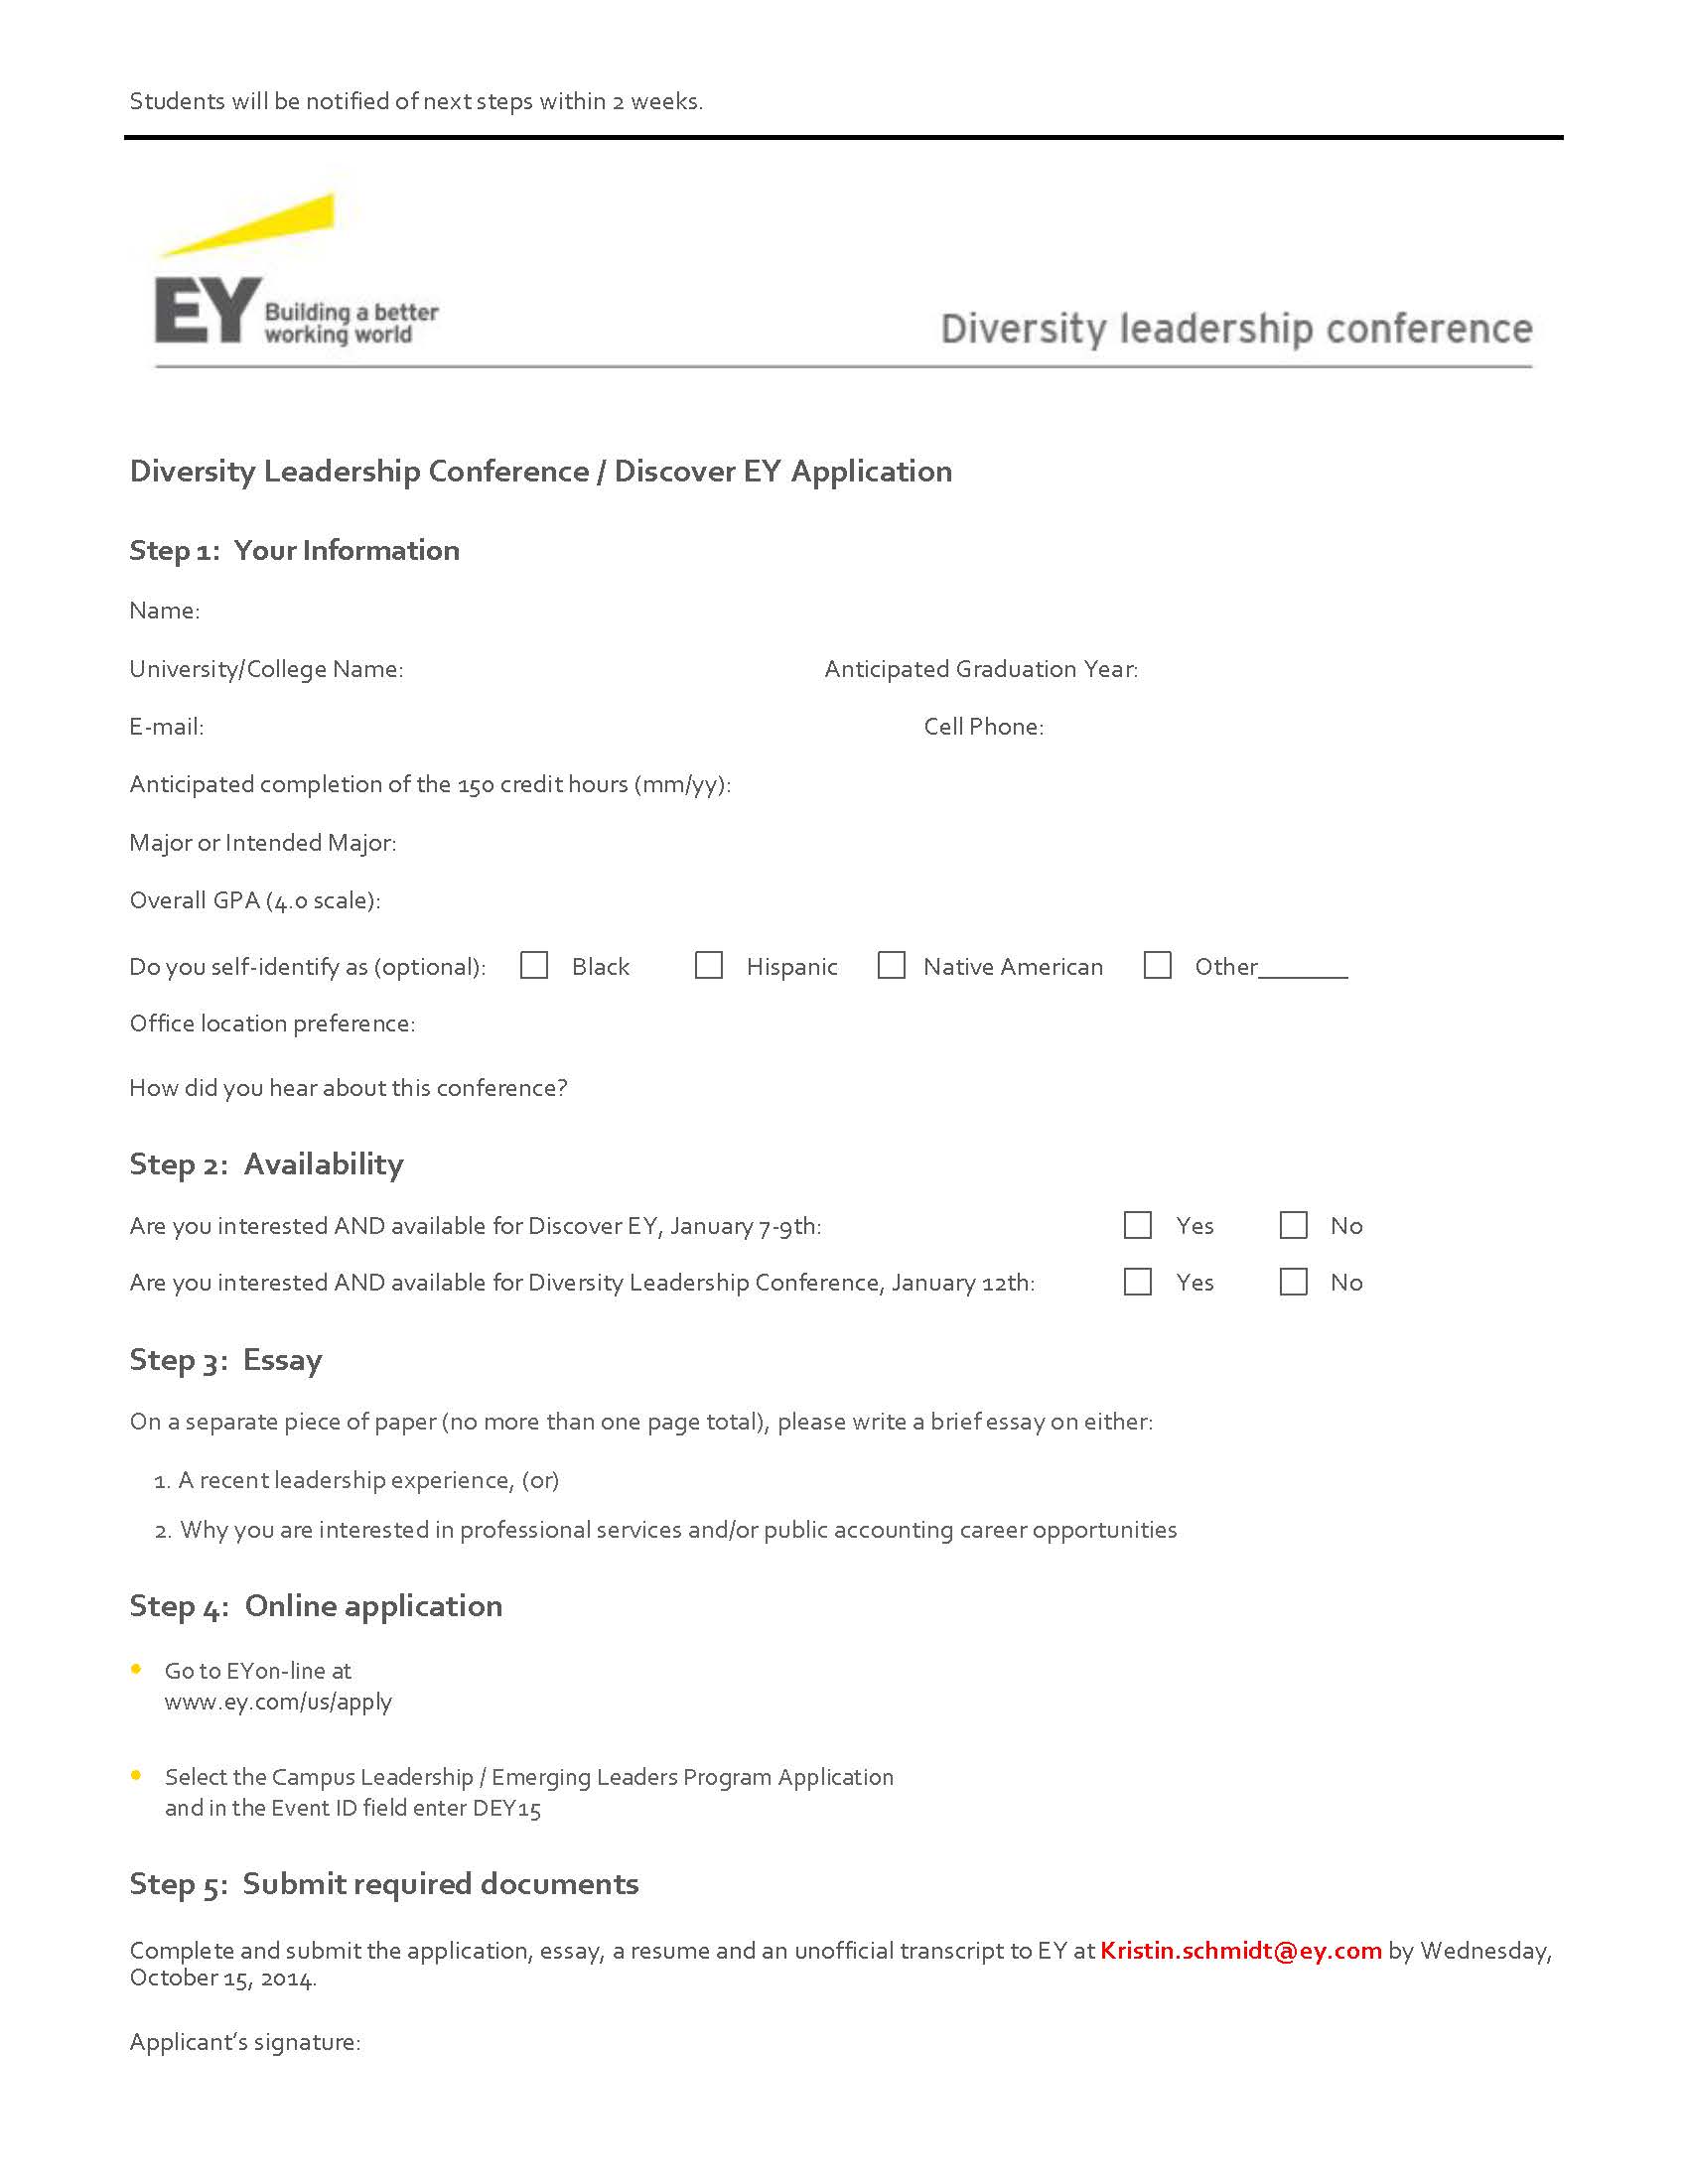 Ernst & Young’s Diversity Leadership Conference Application Deadline